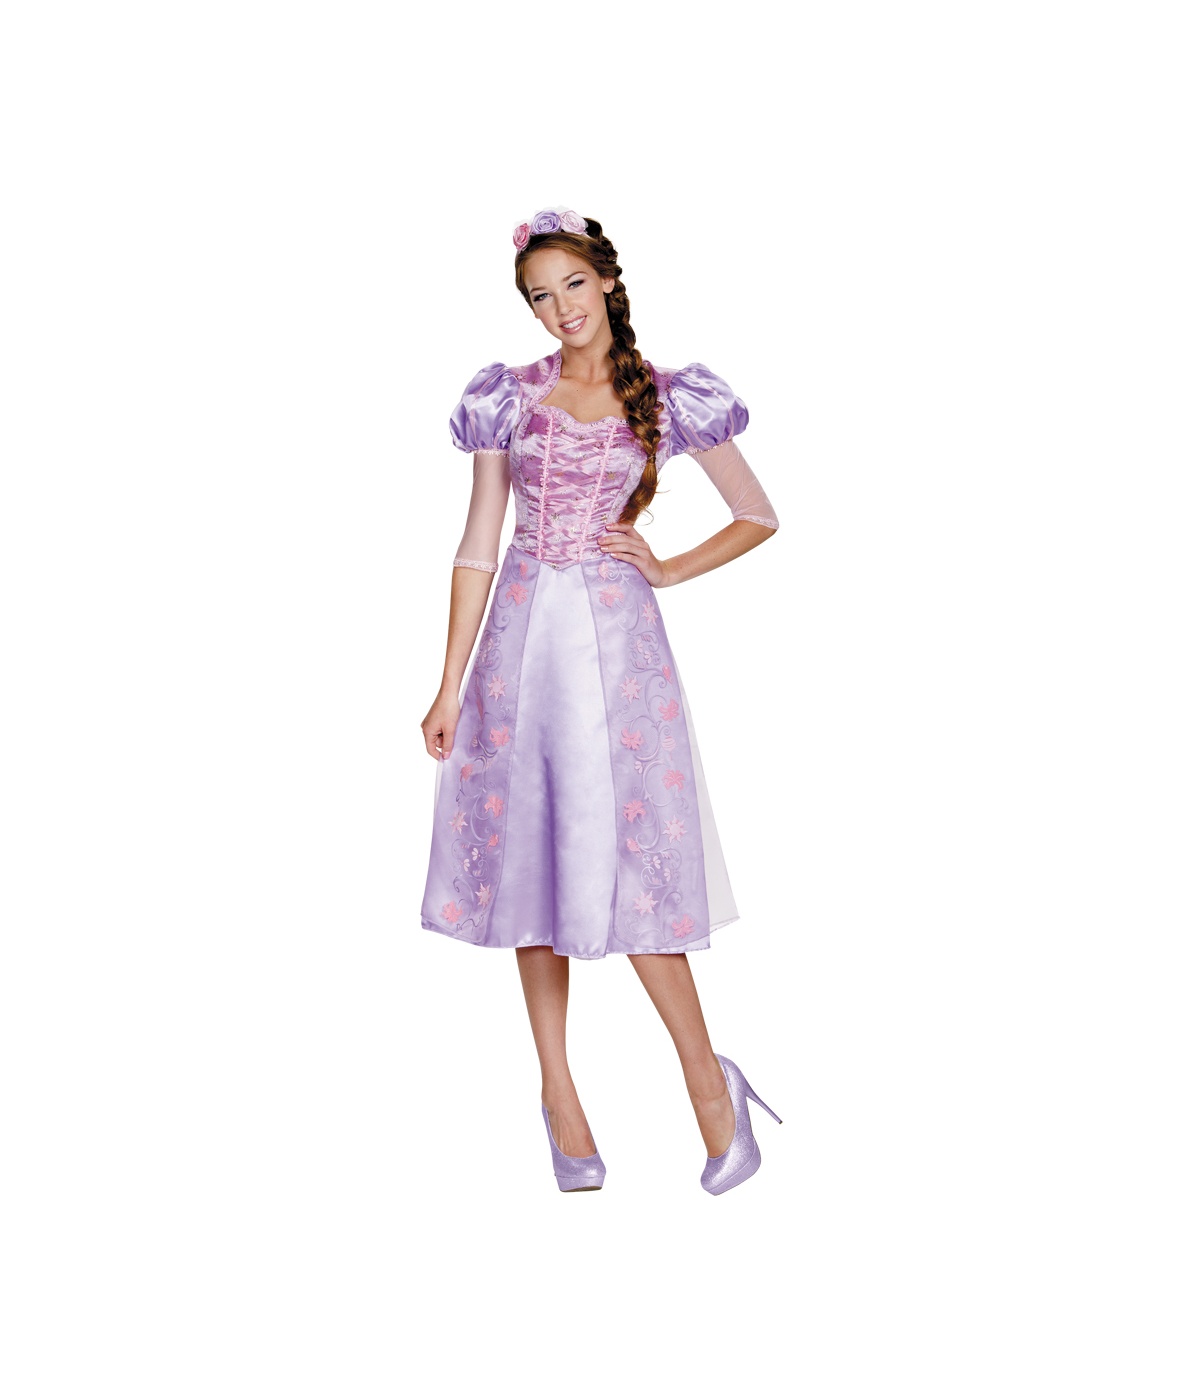 Princess Rapunzel Women Dress Disney Costume